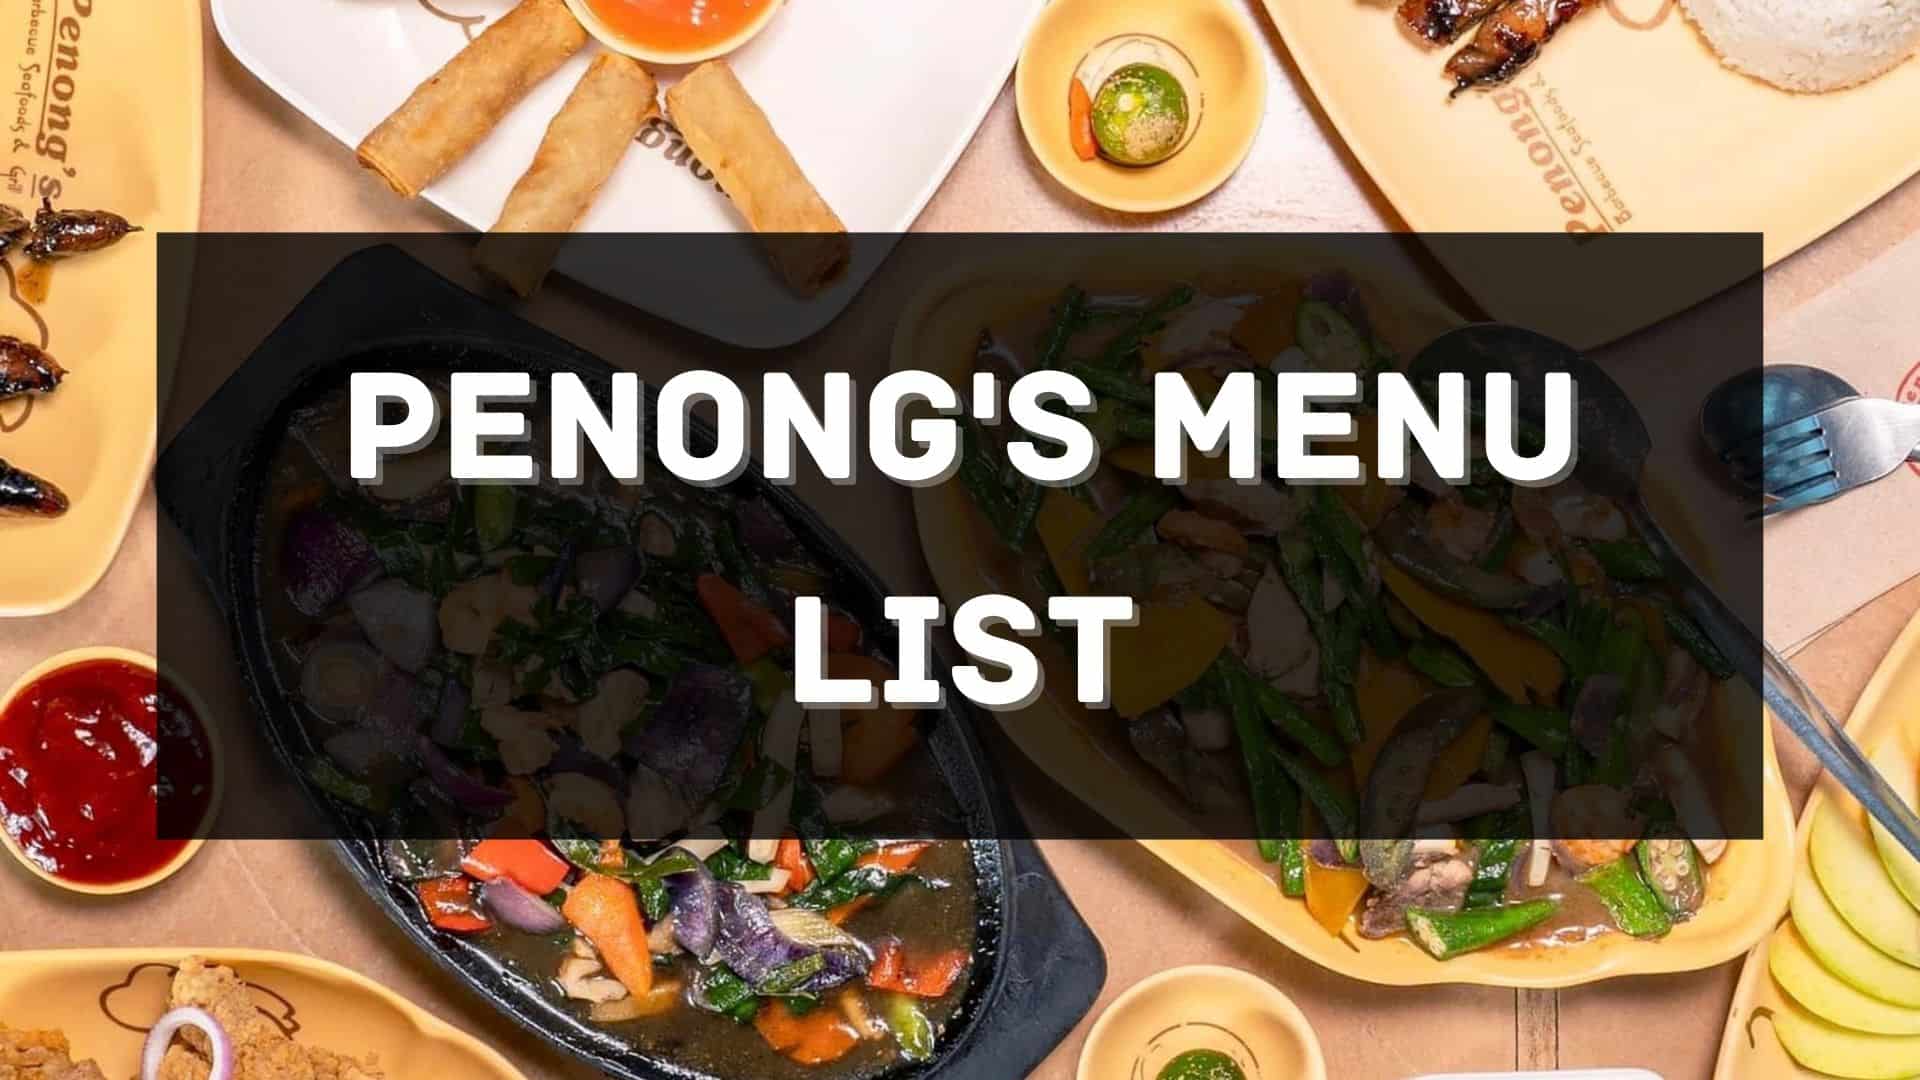 penong's menu prices philippines